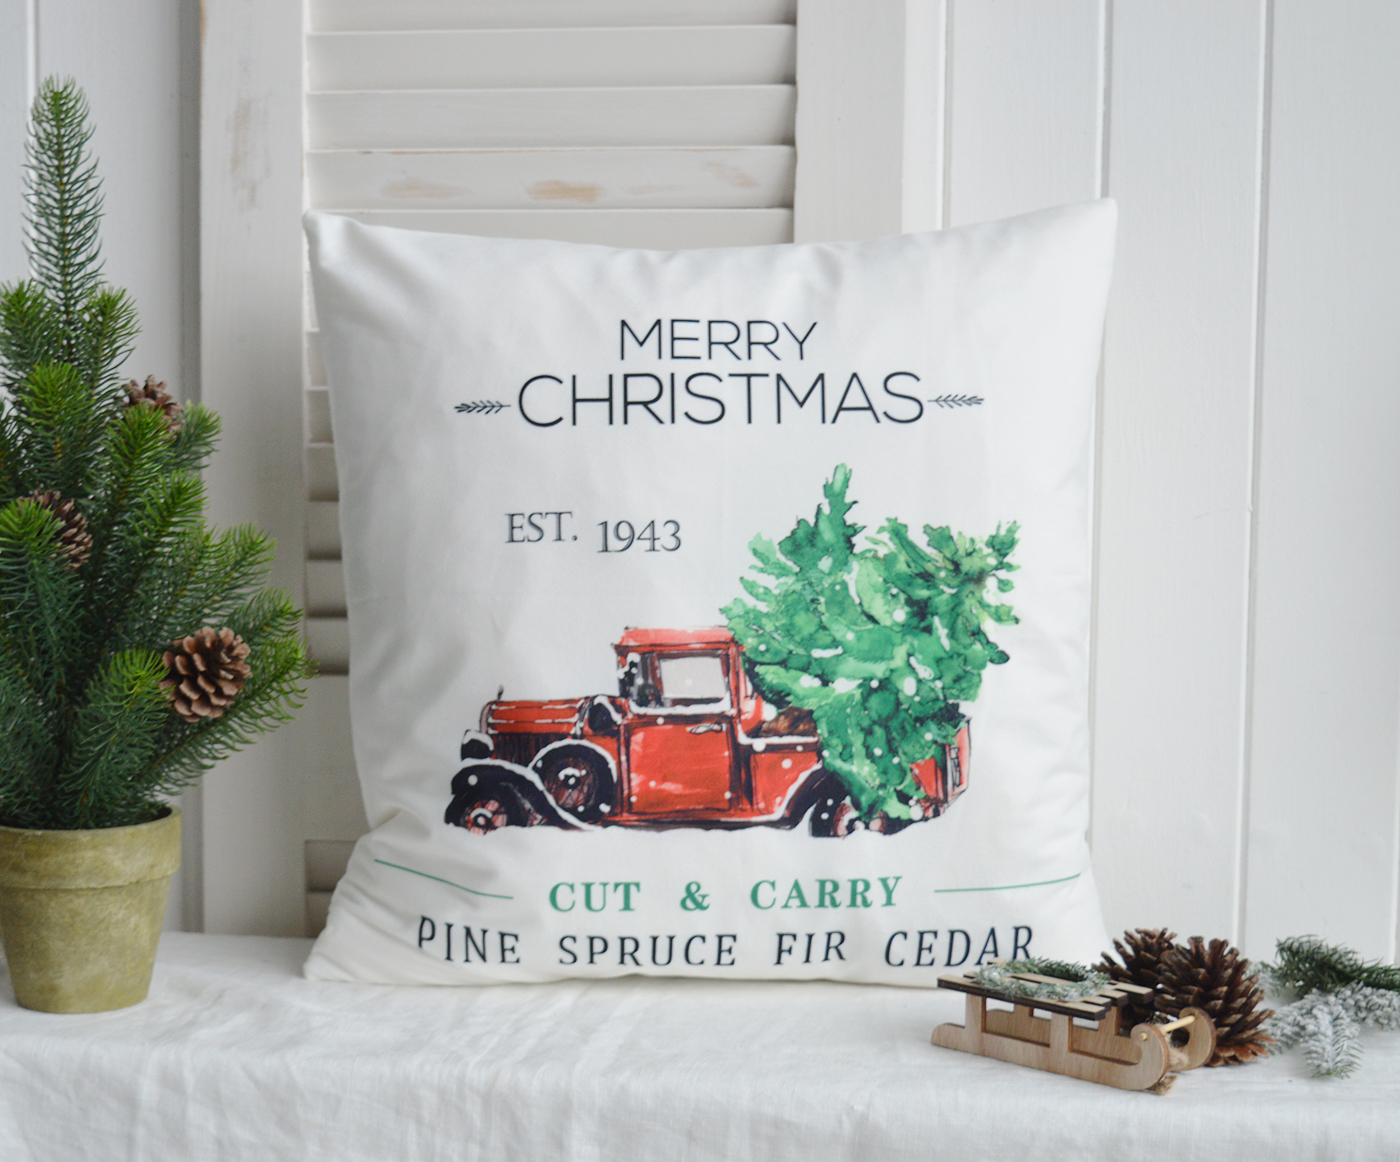 Christmas Cushion Covers - New England style Christmas Decor